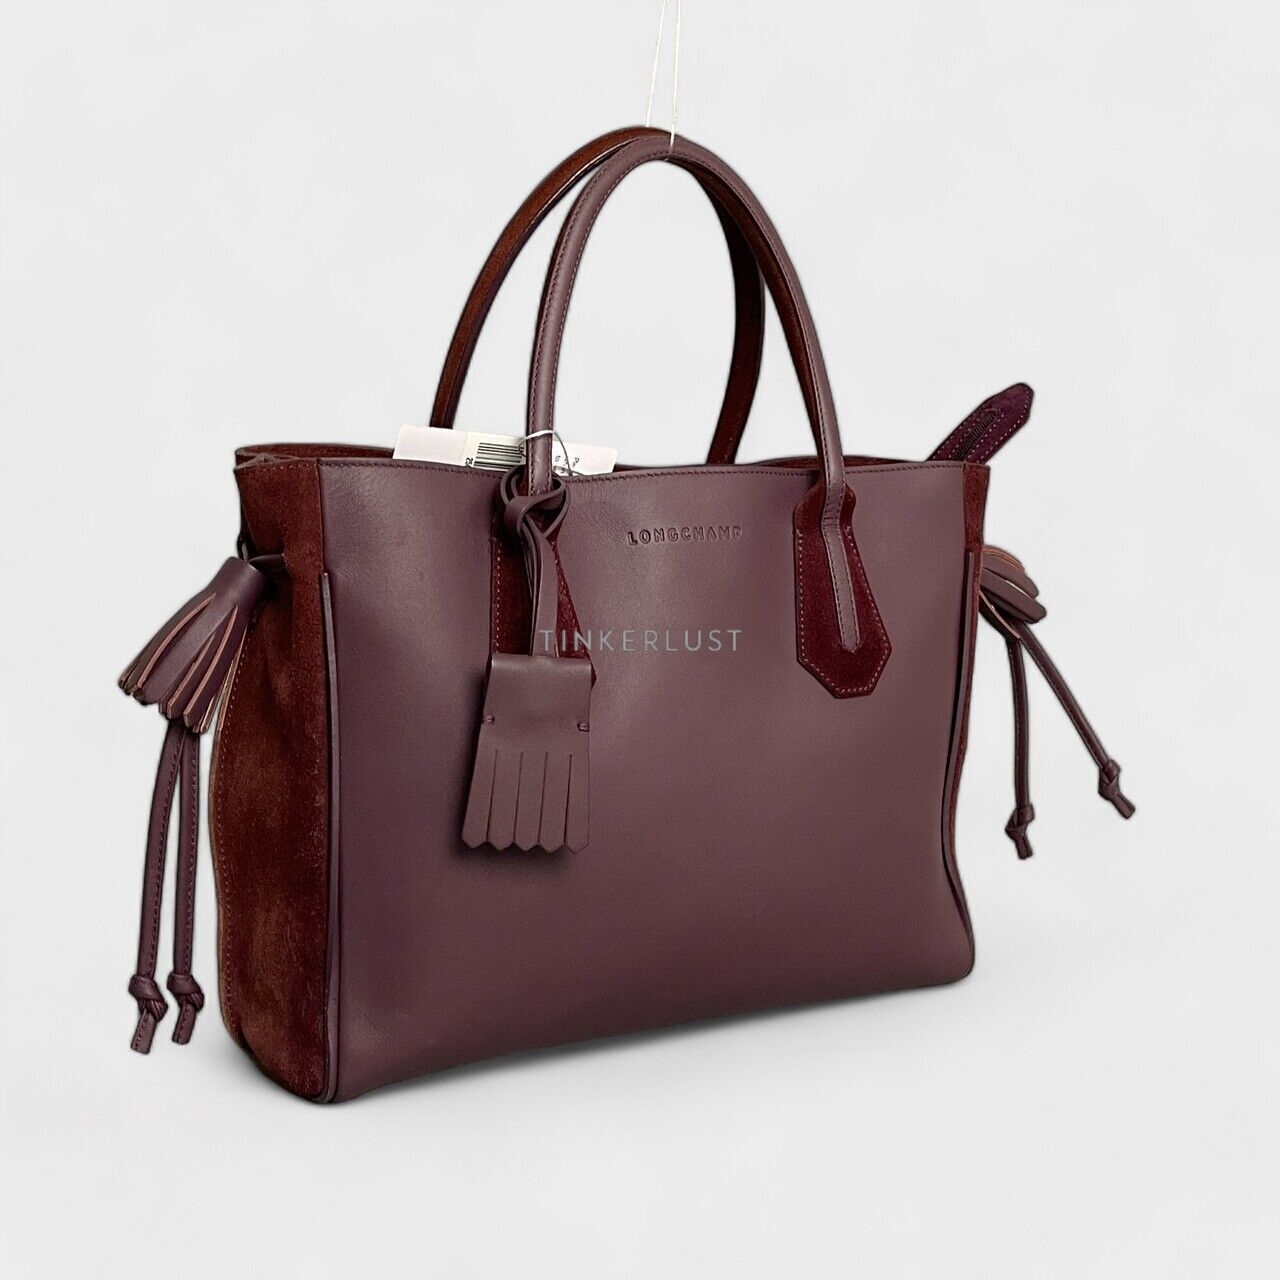 Longchamp Penelope Purple Leather GHW Tote Bag